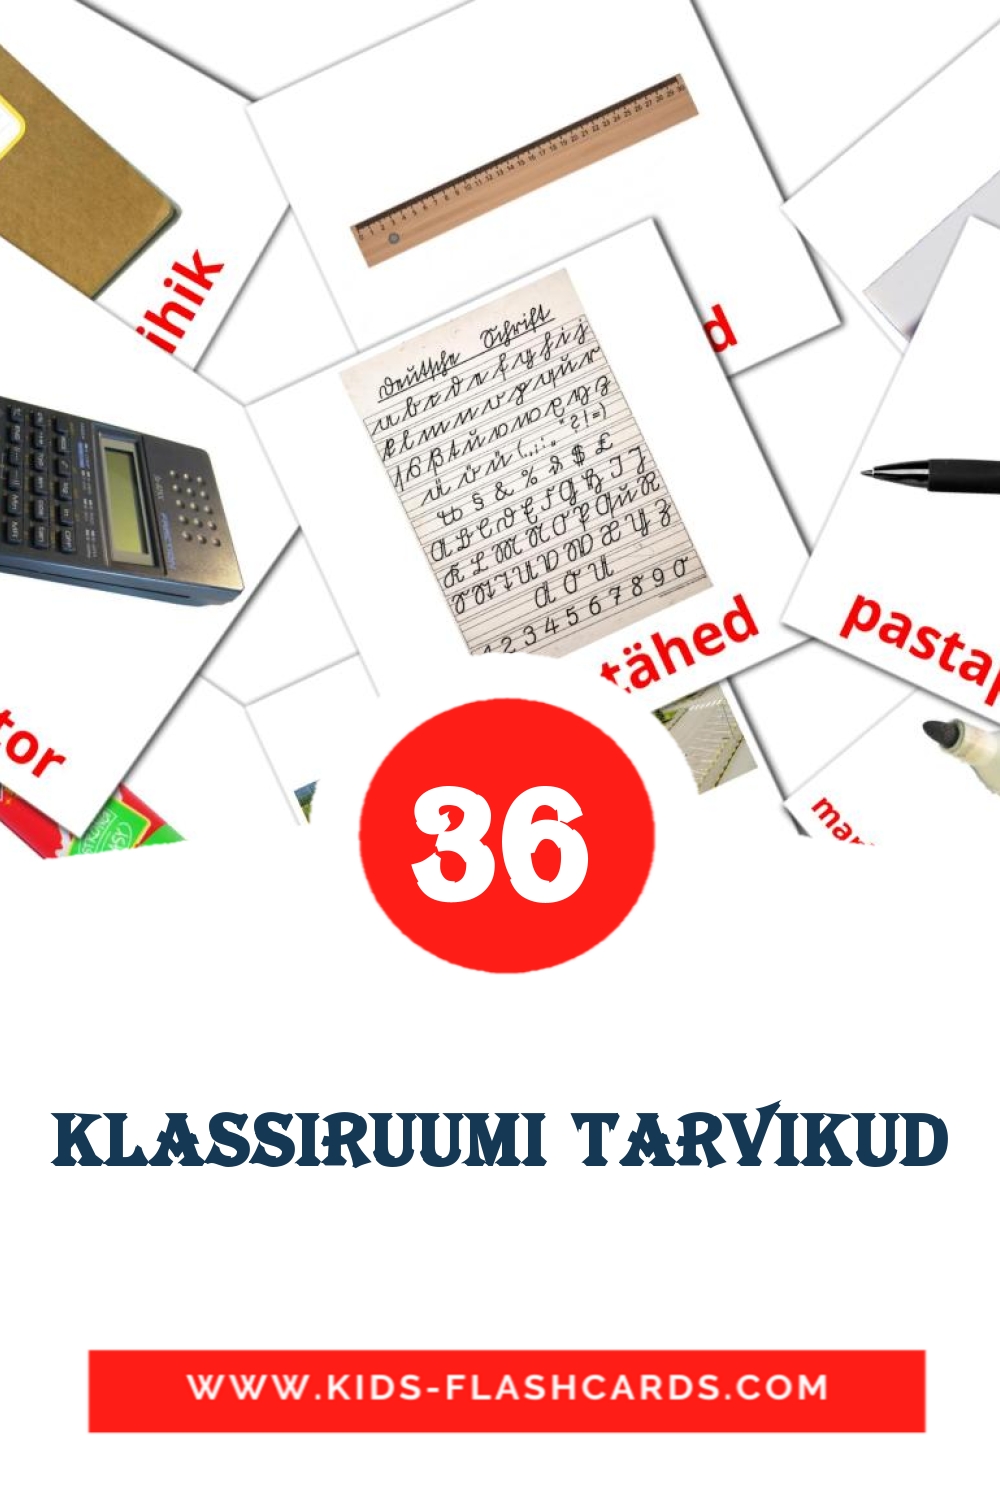 36 carte illustrate di Klassiruumi tarvikud per la scuola materna in estone